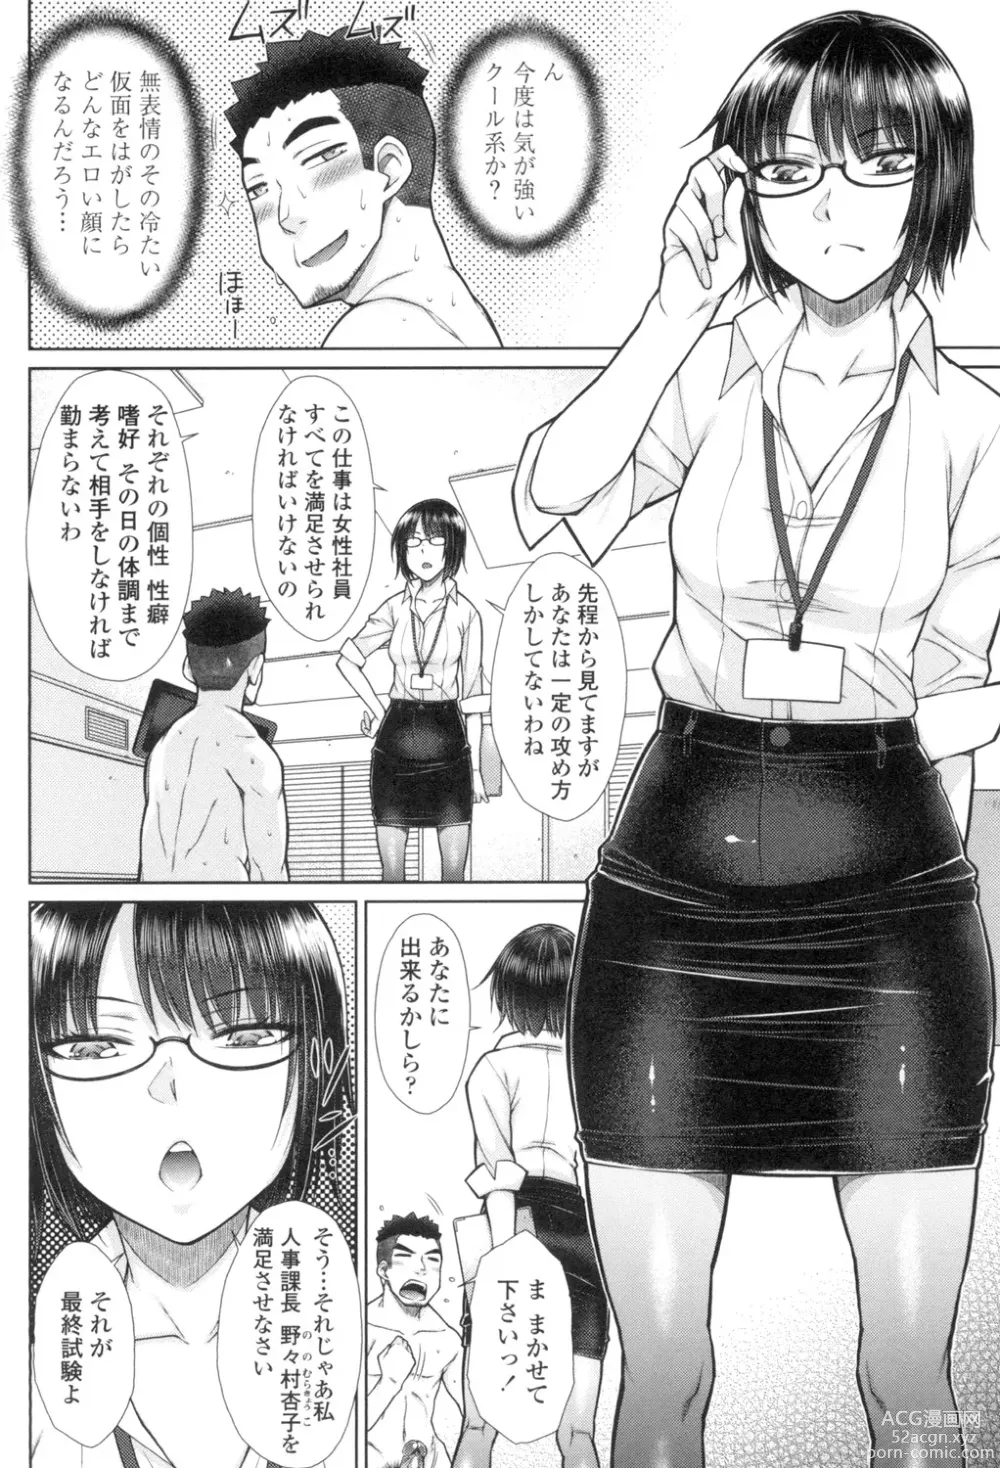 Page 13 of manga Kochira Joshi Shain Senyou Seishorika - Sex Industry Division for Womens Employees Dedicated